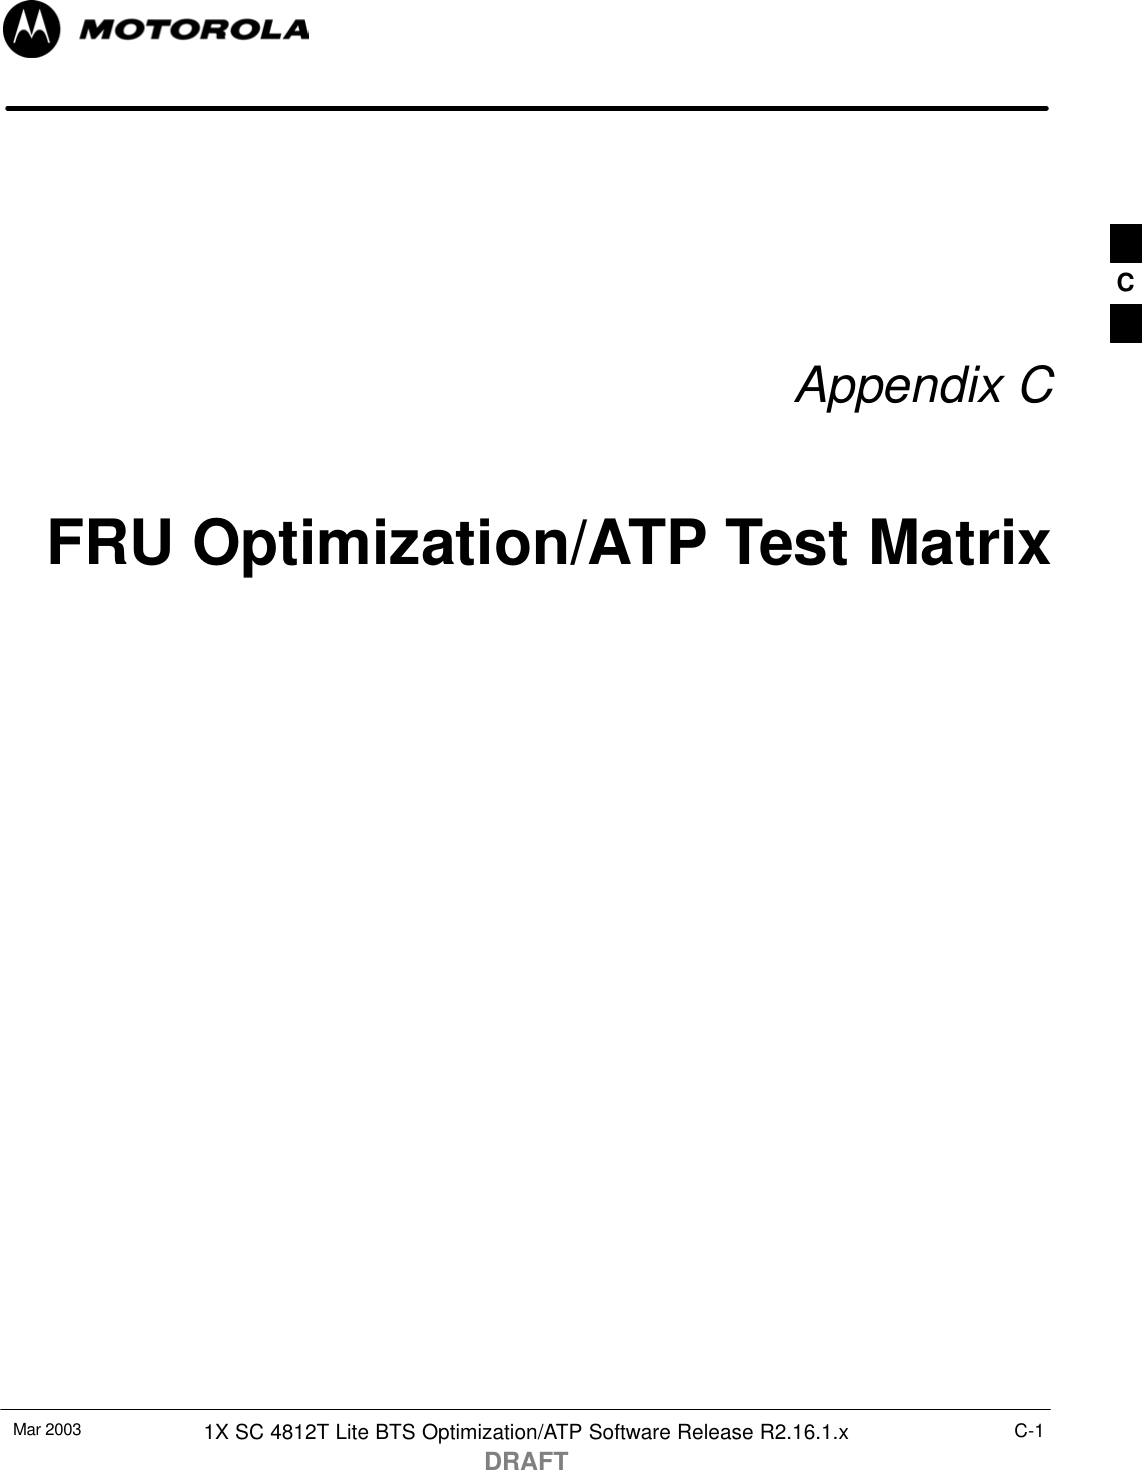 Mar 2003 1X SC 4812T Lite BTS Optimization/ATP Software Release R2.16.1.xDRAFTC-1Appendix CFRU Optimization/ATP Test MatrixC